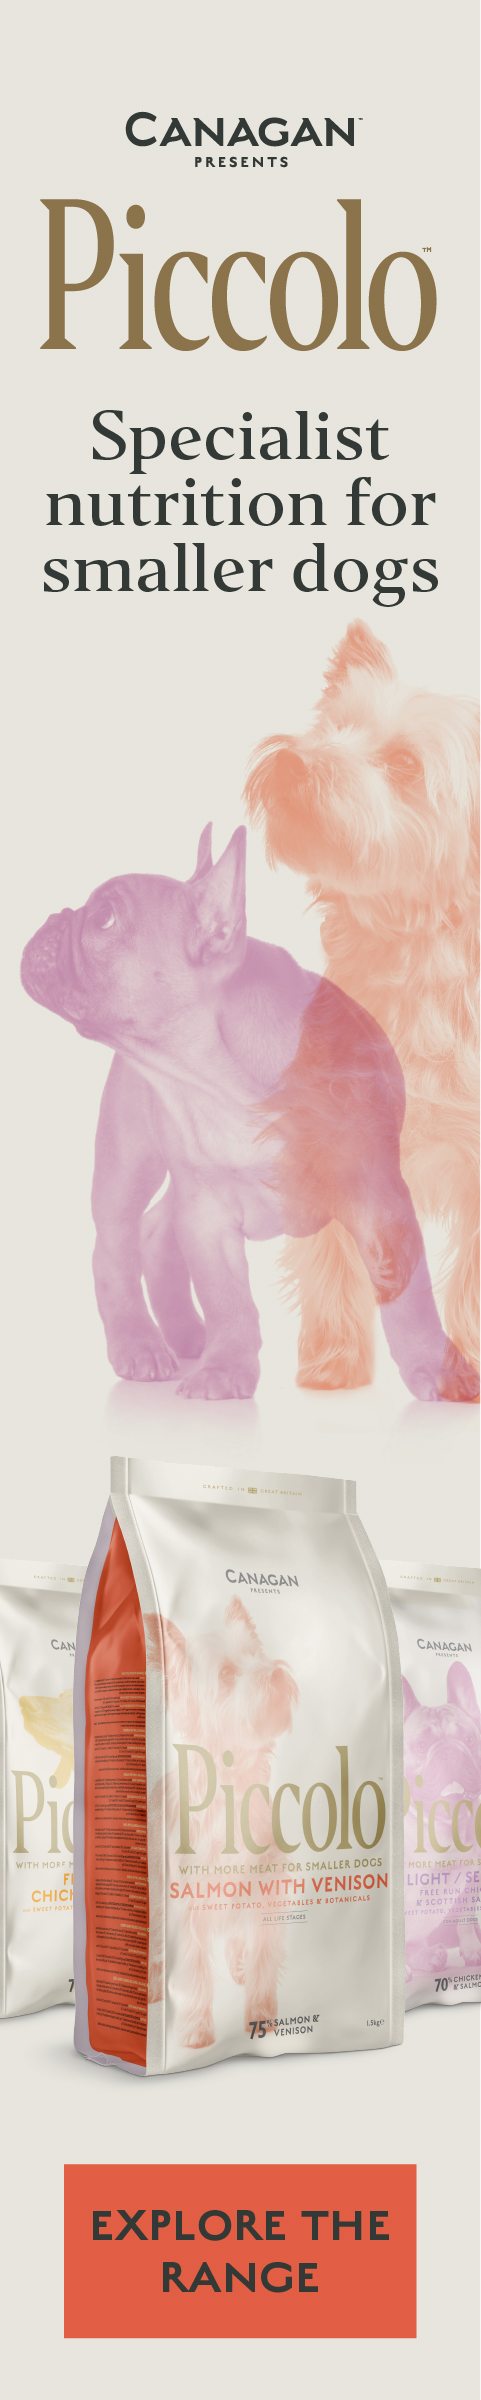 Piccolo - Specialist Nutrition for Smaller Dogs